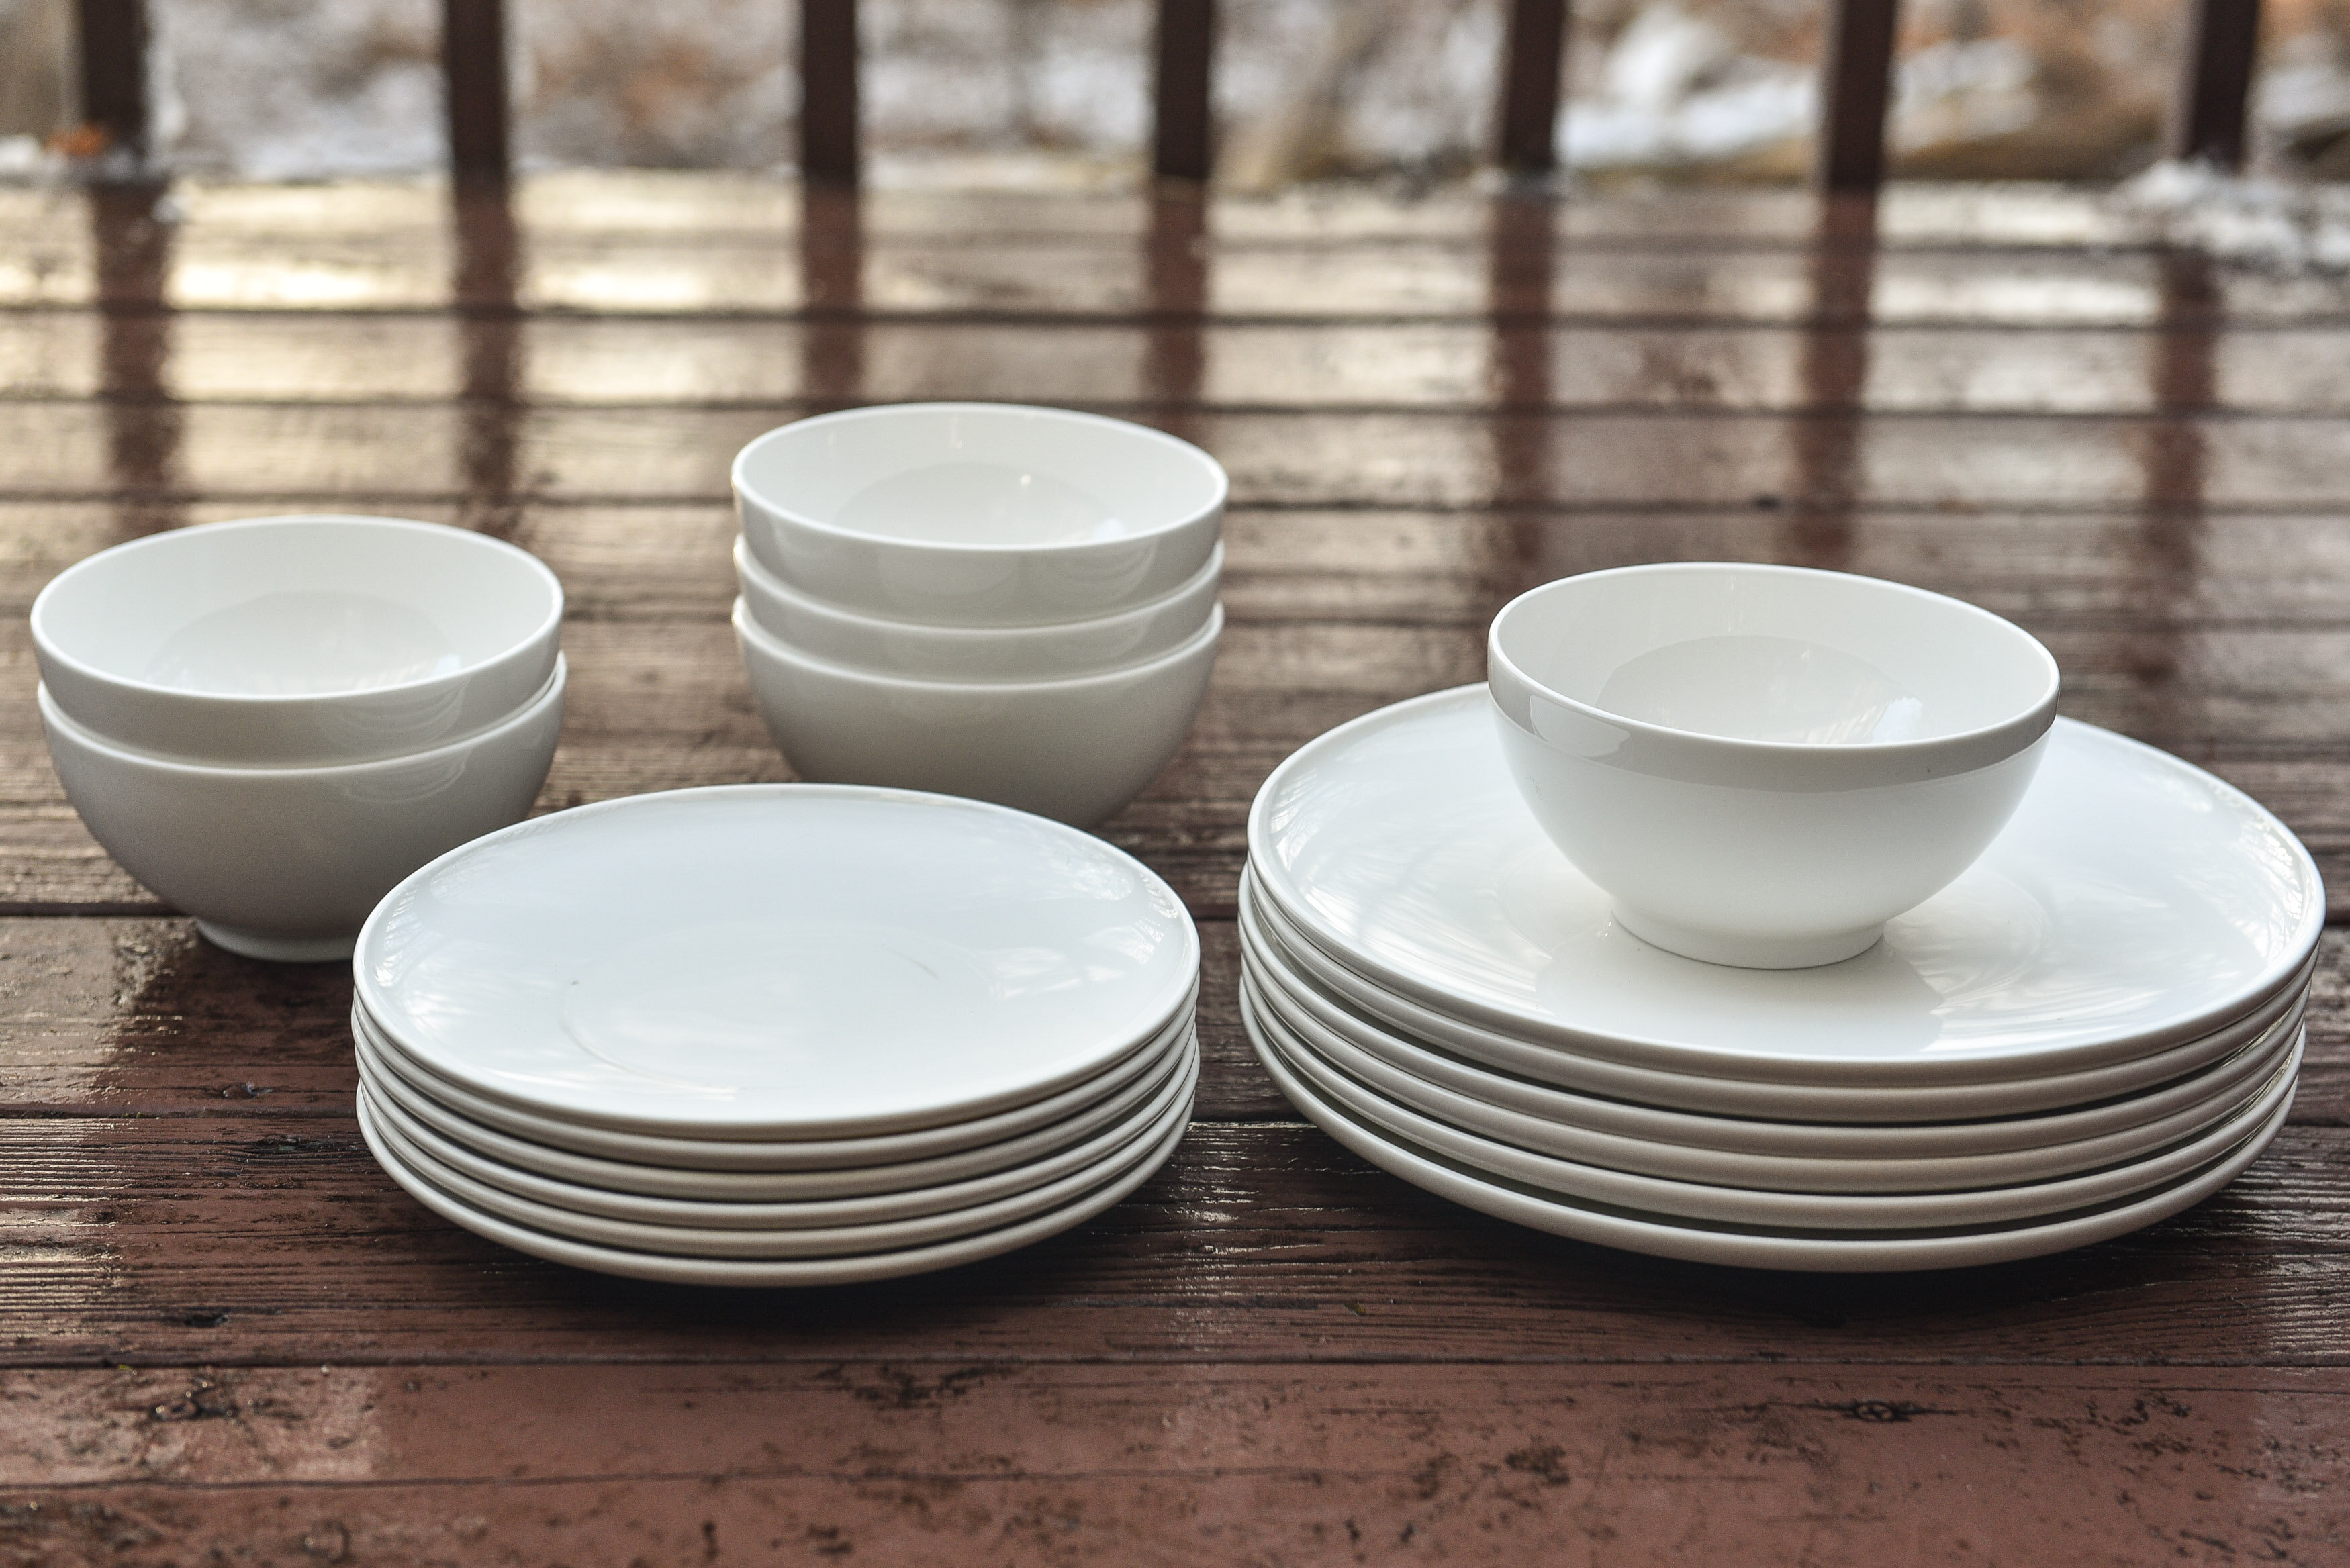 18-pcs Dinner Set Porcelain Crockery Dining Service for 6 Plates Bowls Tableware 